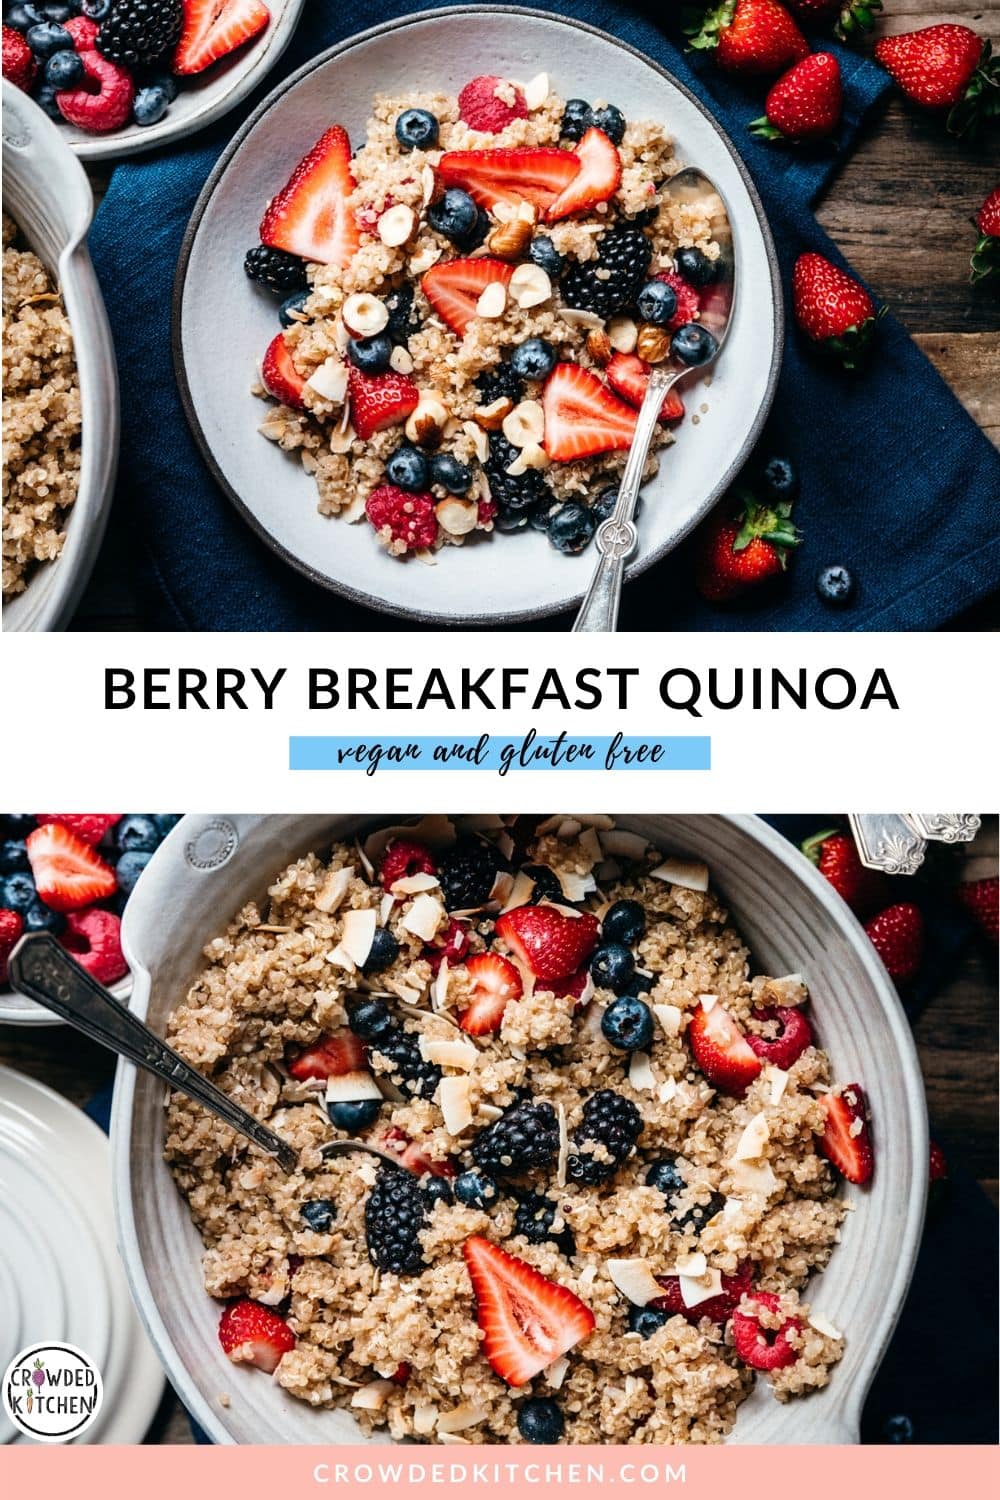 Breakfast Quinoa with Berries (Vegan) - Crowded Kitchen